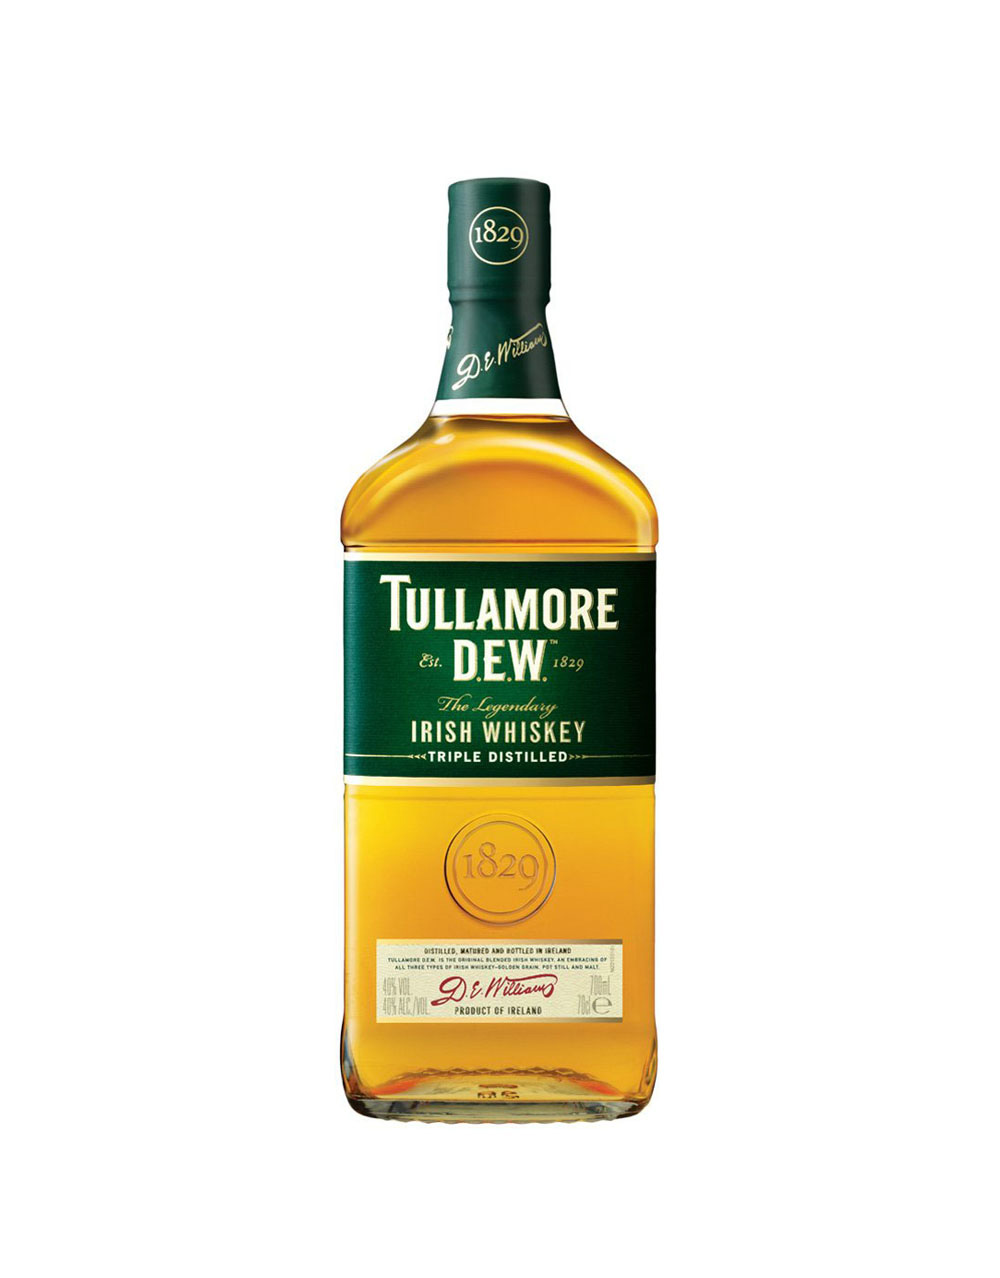 Tullamore D.E.W. Original Irish Whisky